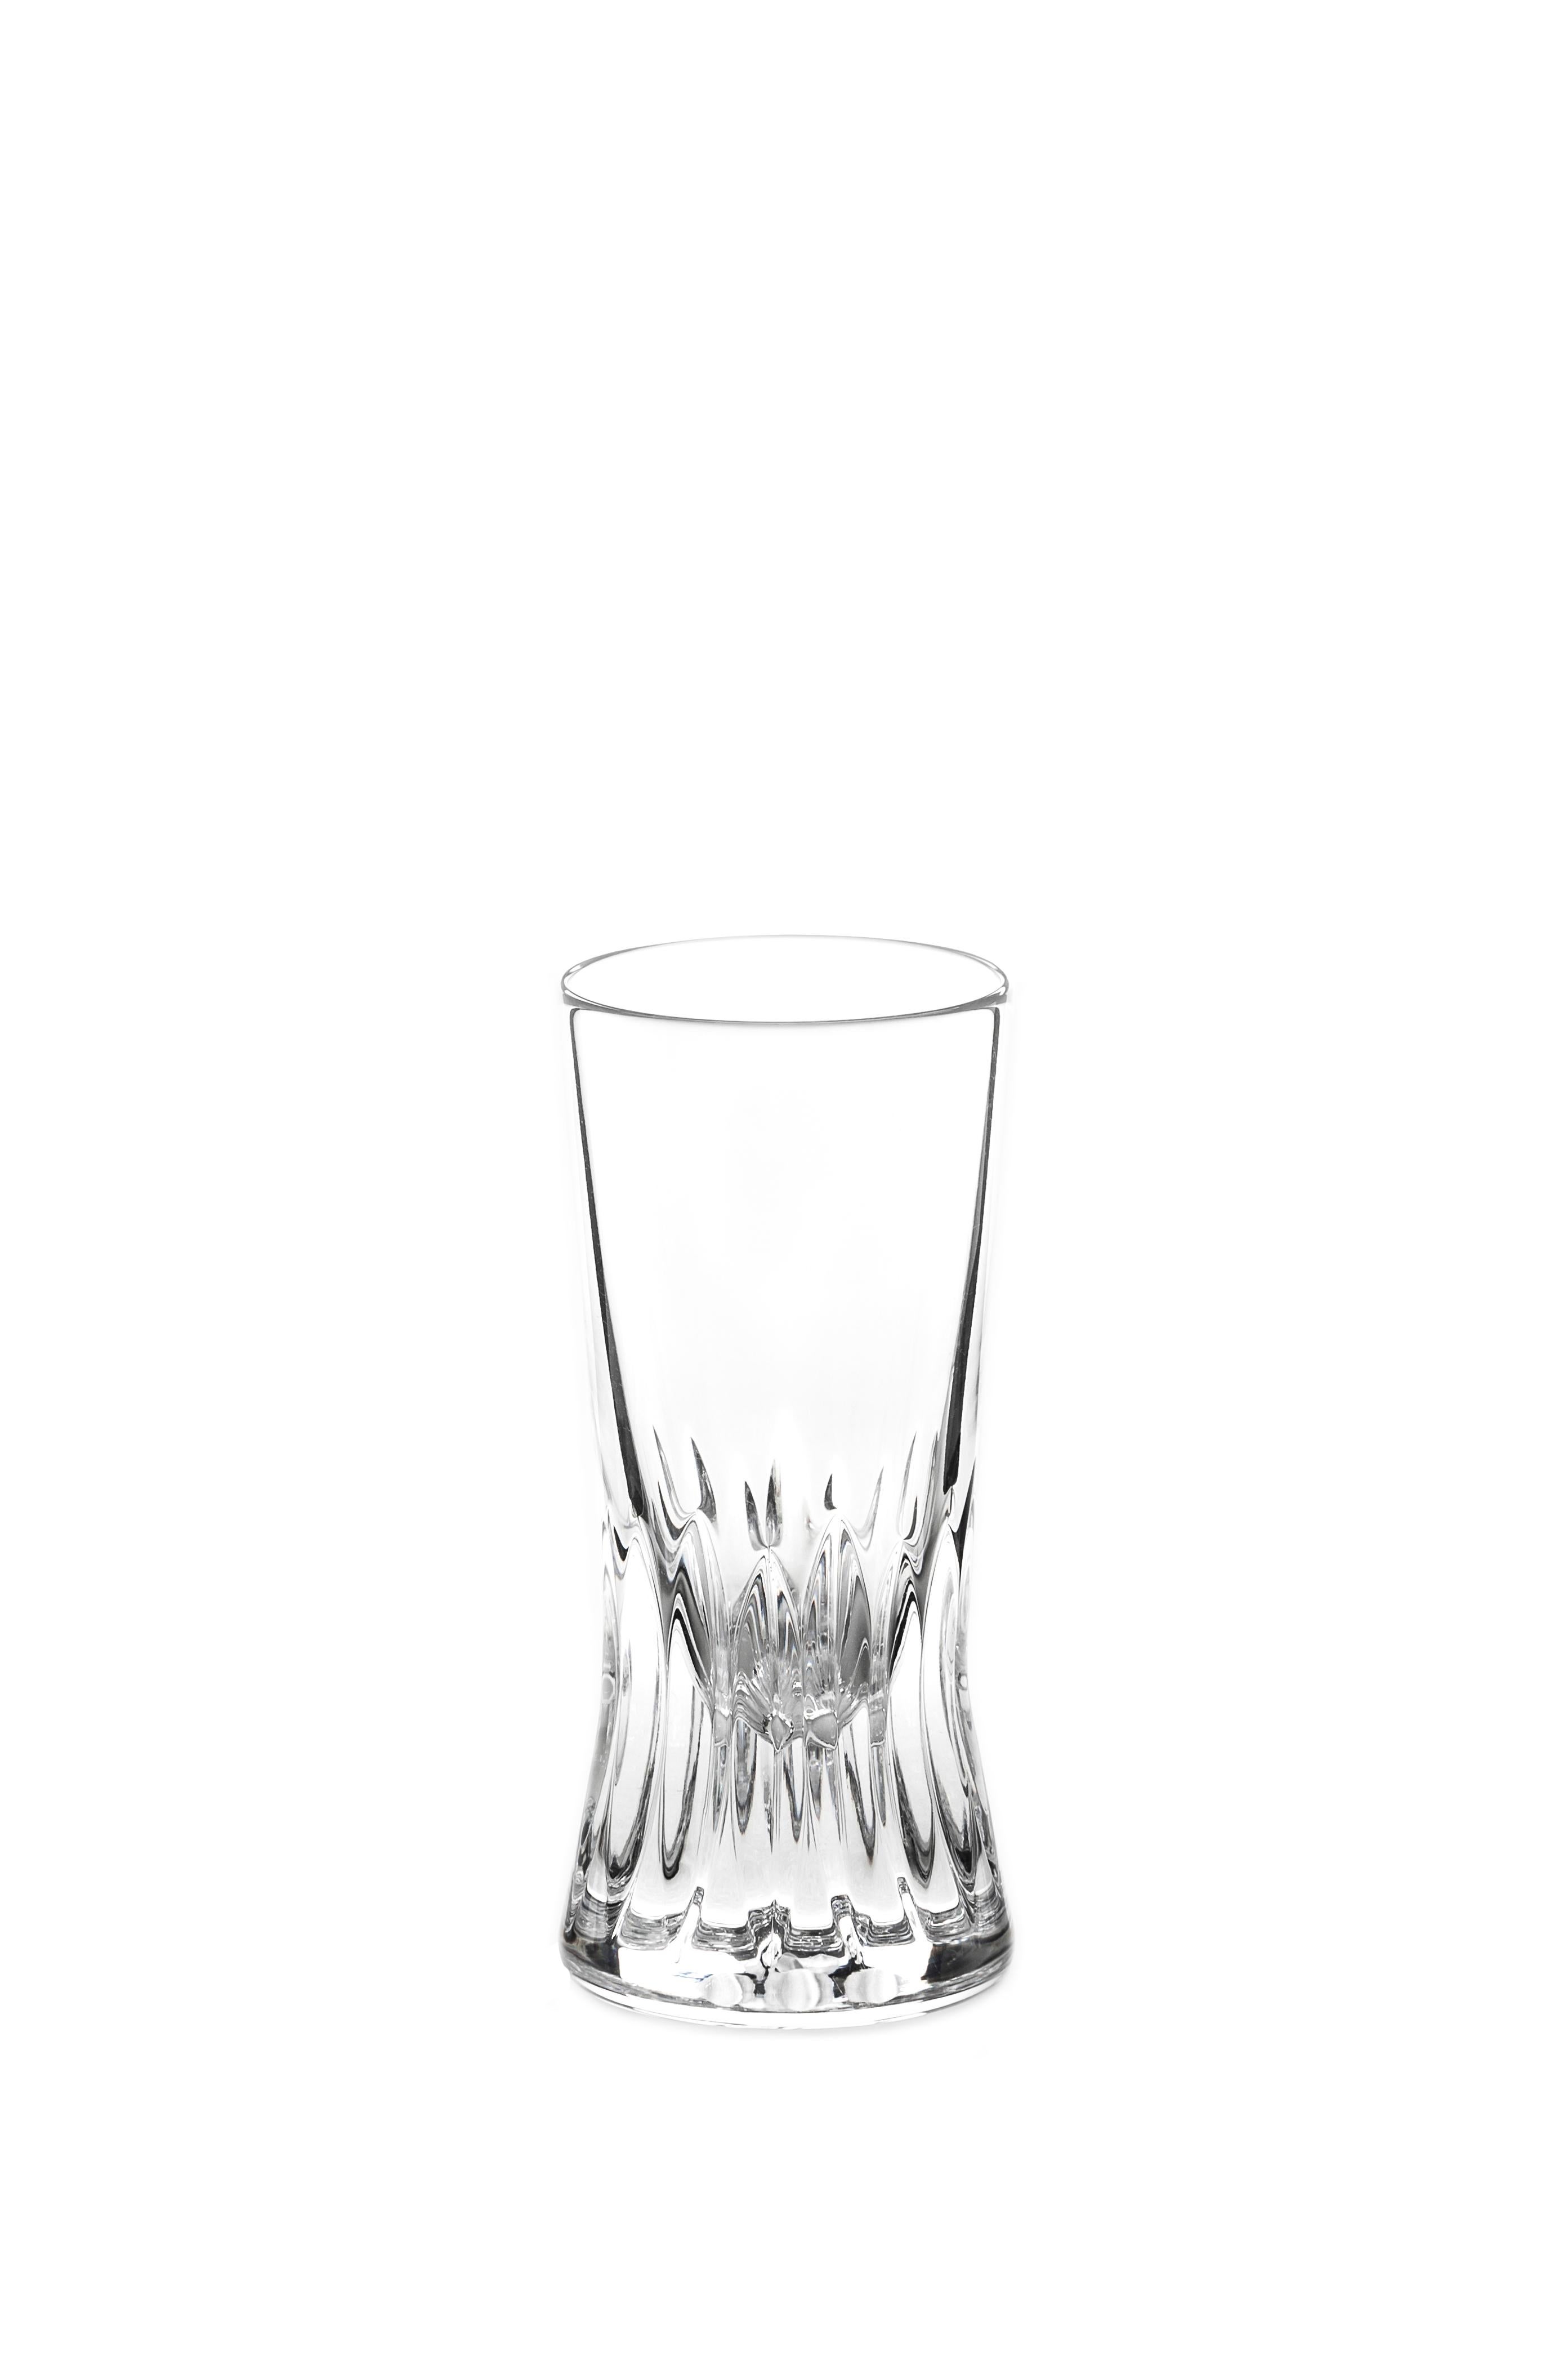 Contemporary Martino Gamper Handmade Irish Crystal Shot Glass 'Cuttings' Series Set of 4 For Sale